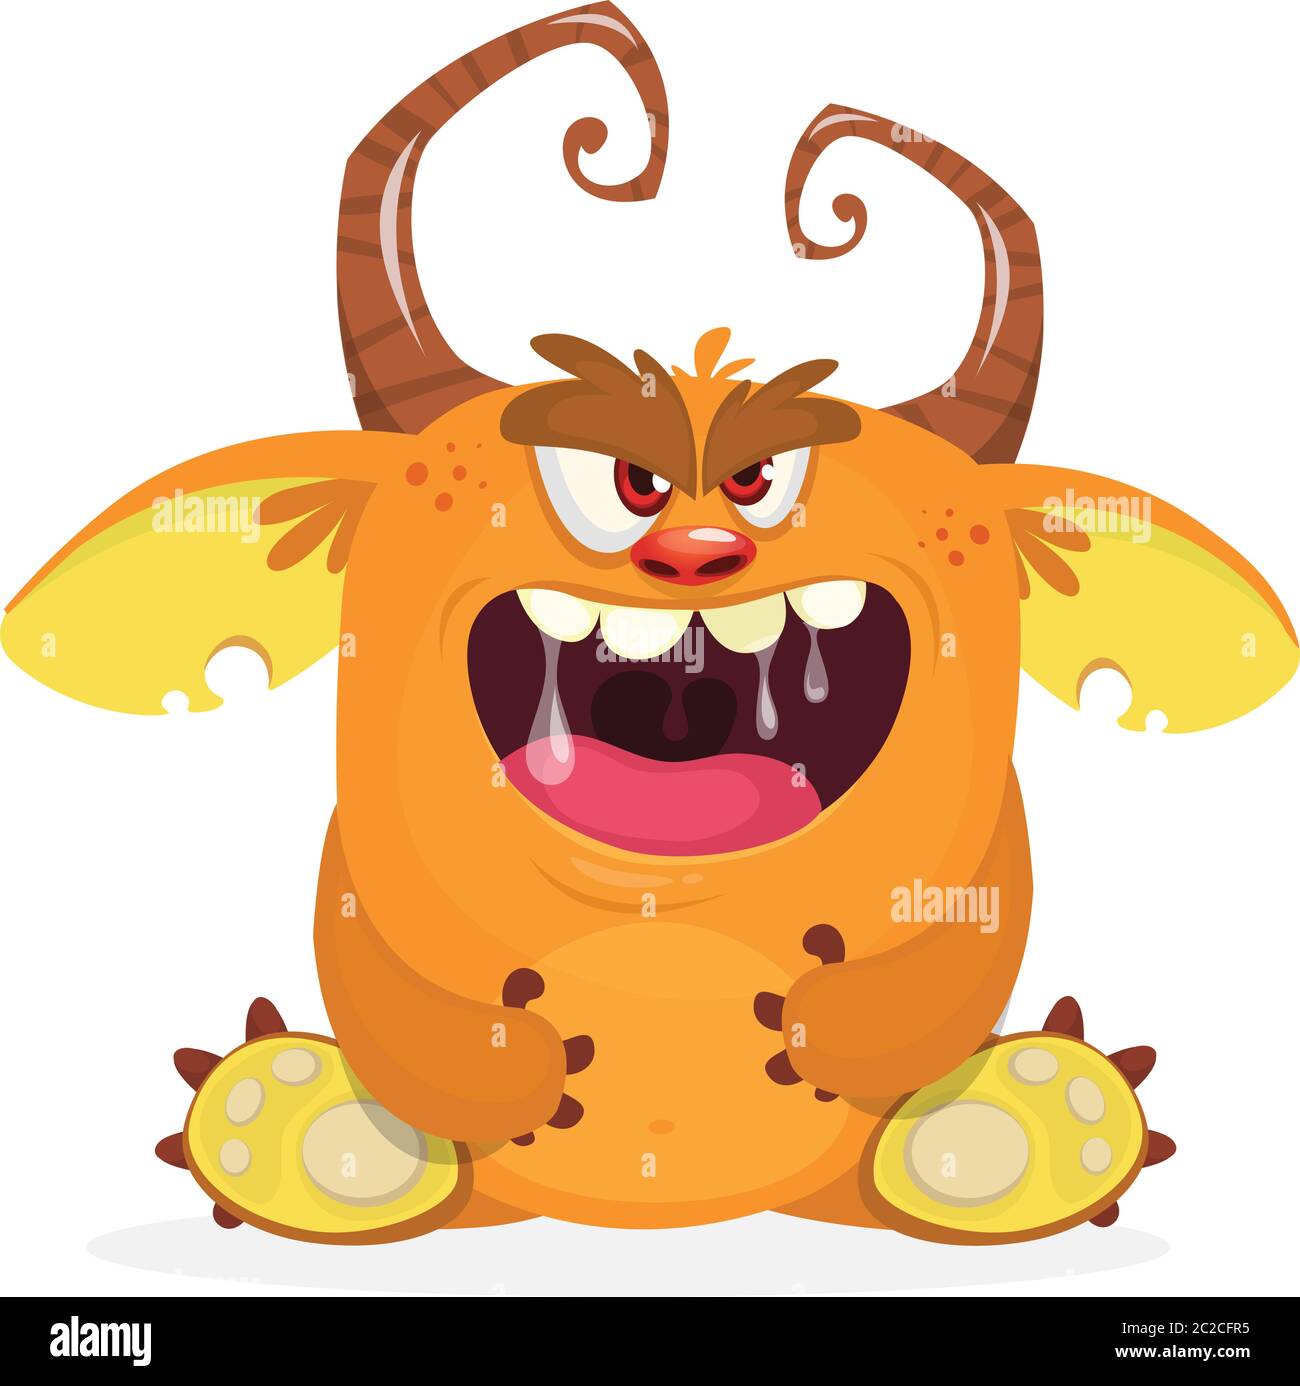 Angry cartoon monster sitting. Halloween vector horned monster